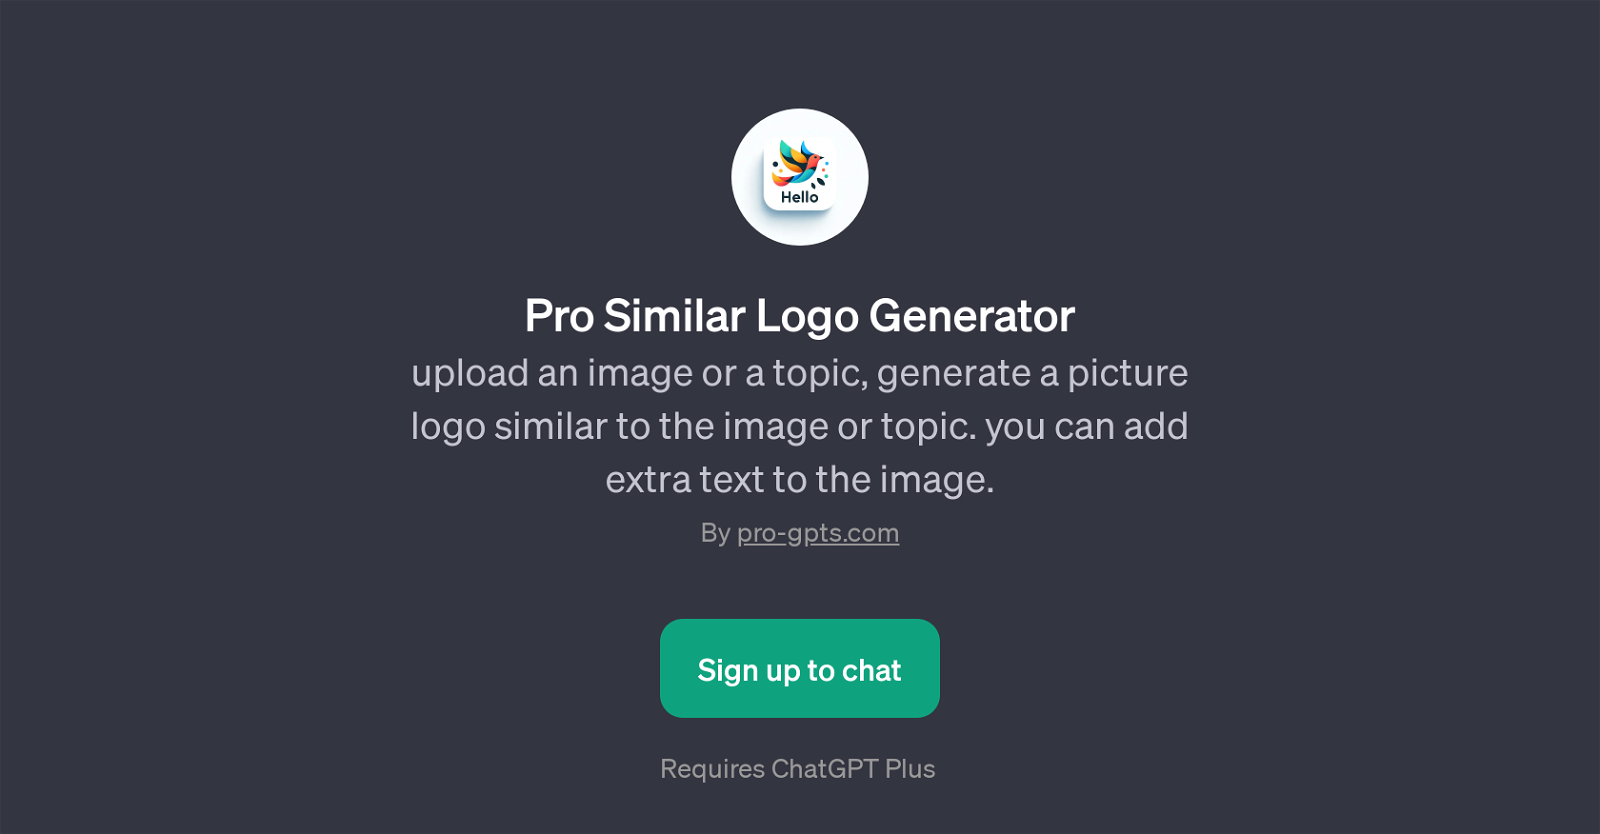 Pro Similar Logo Generator website